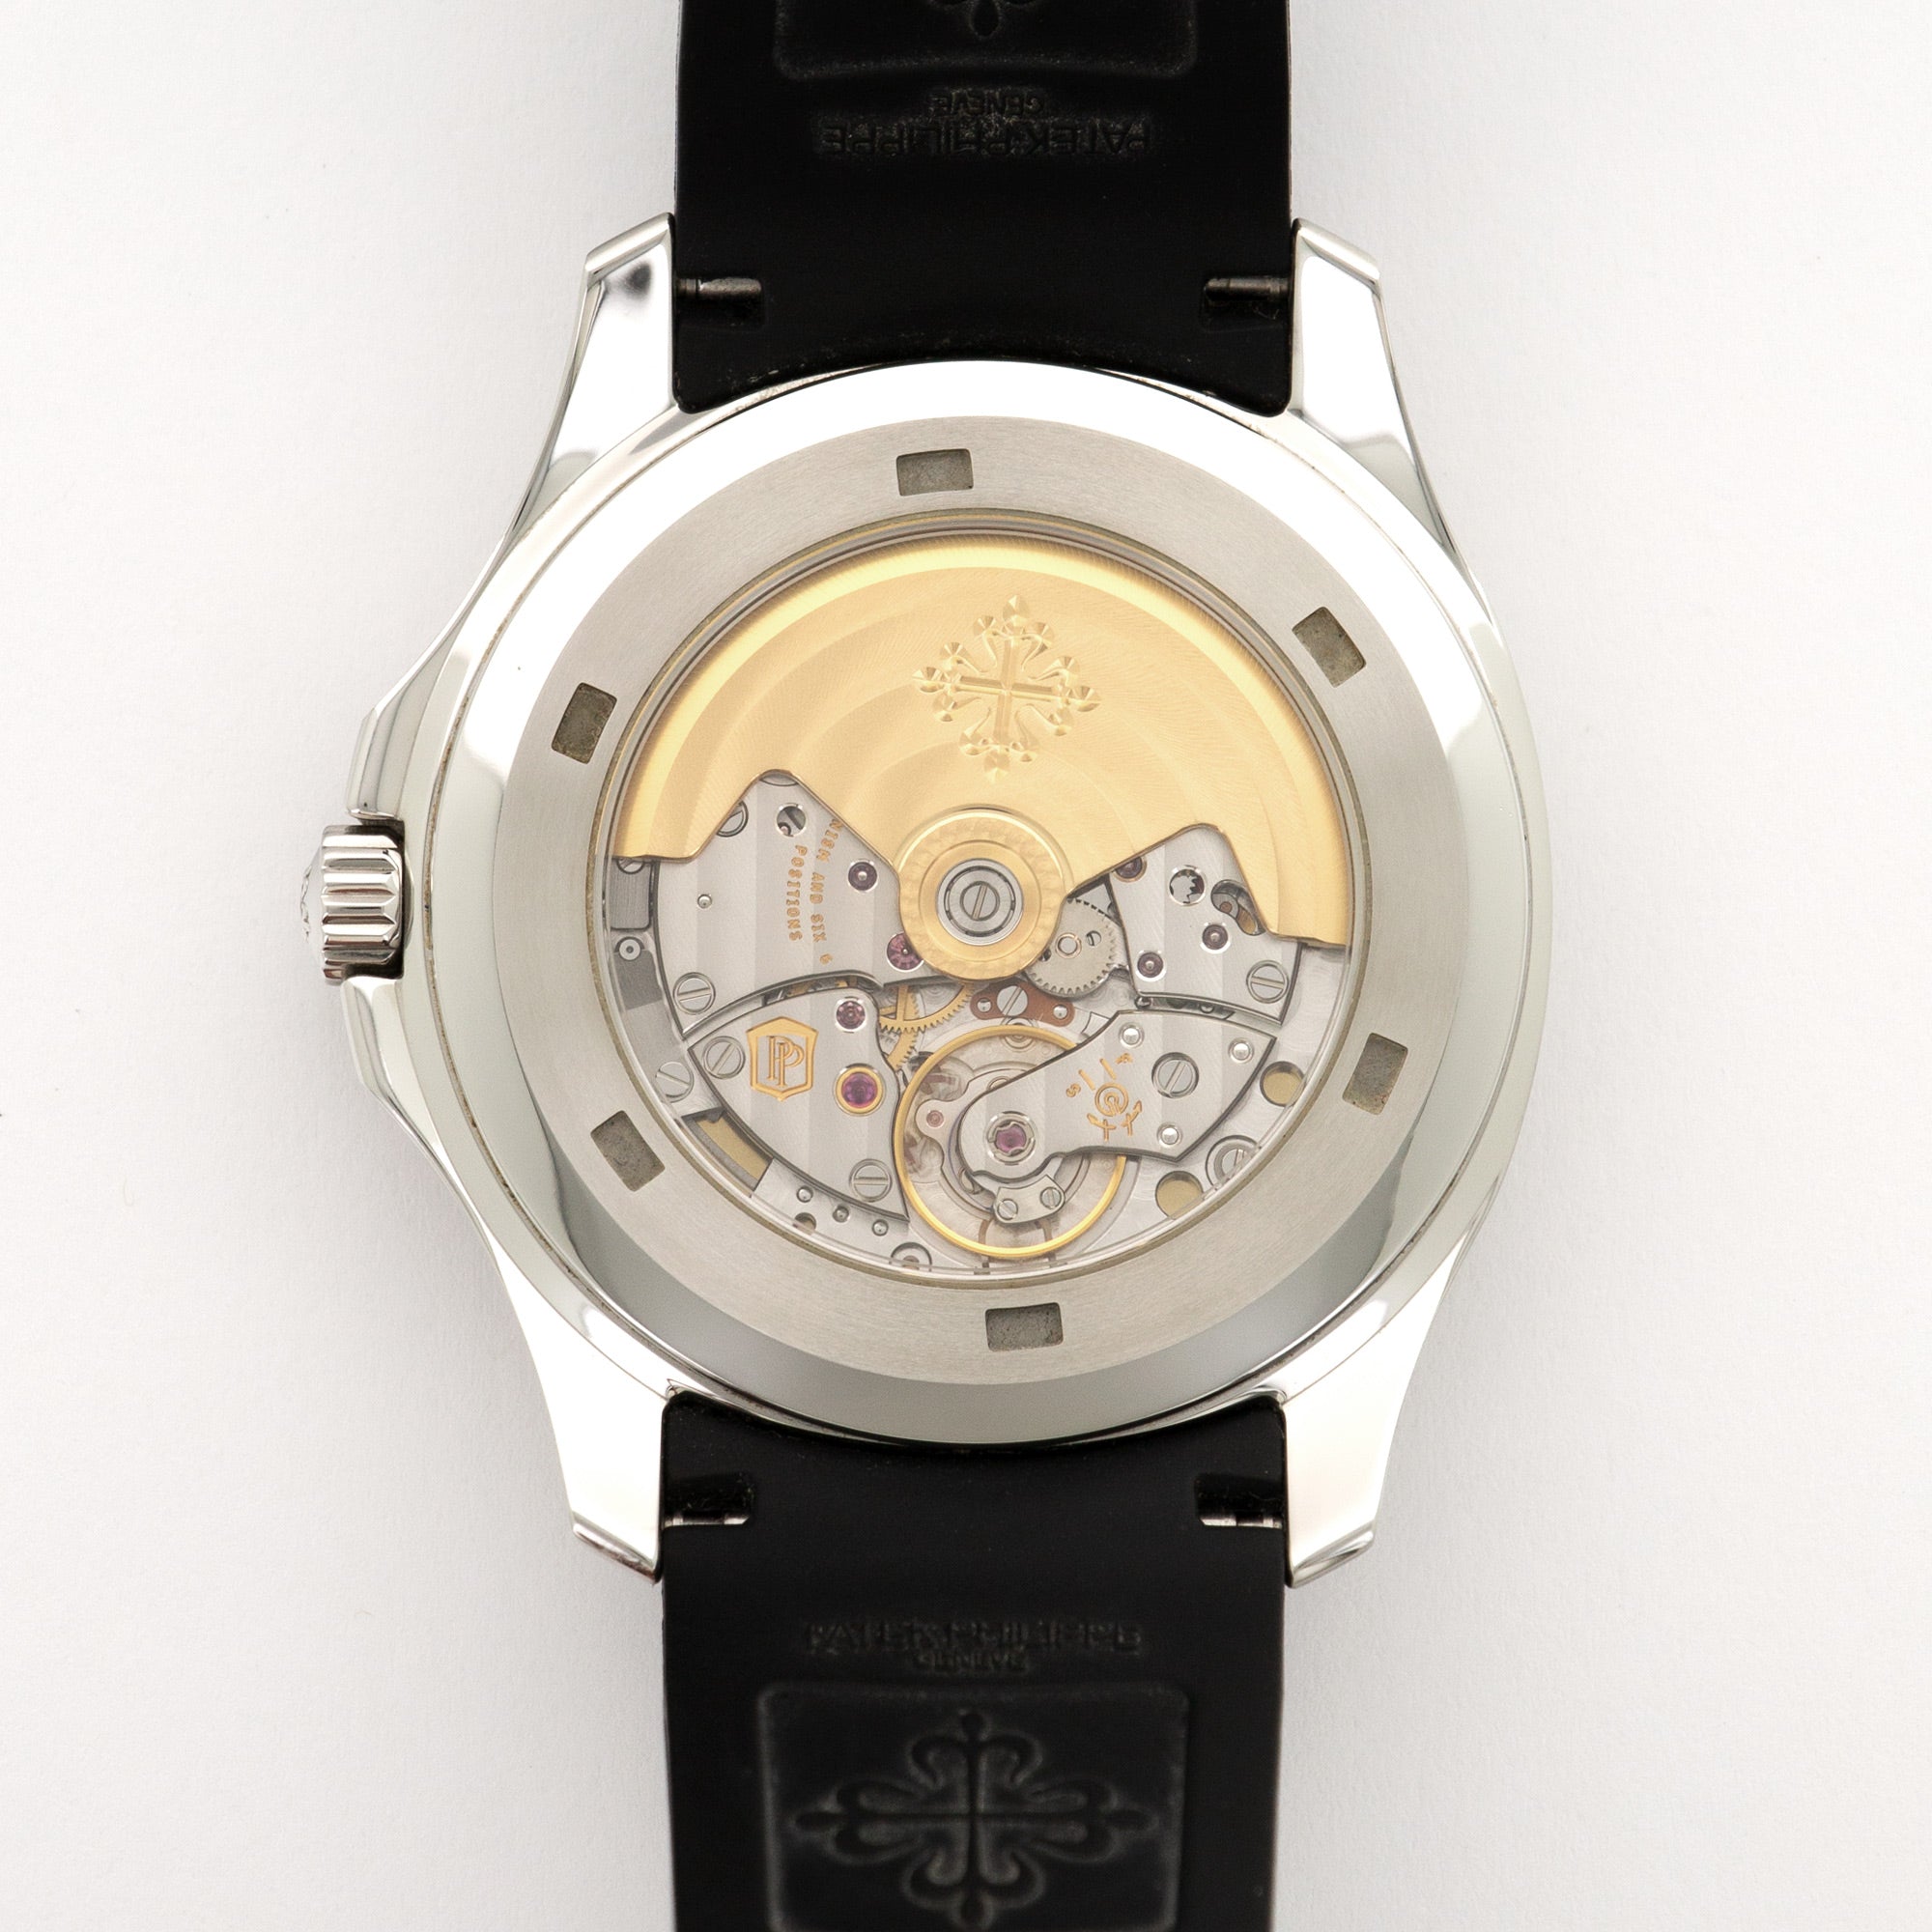 Patek Philippe Aquanaut Jumbo Automatic Watch Ref. 5167